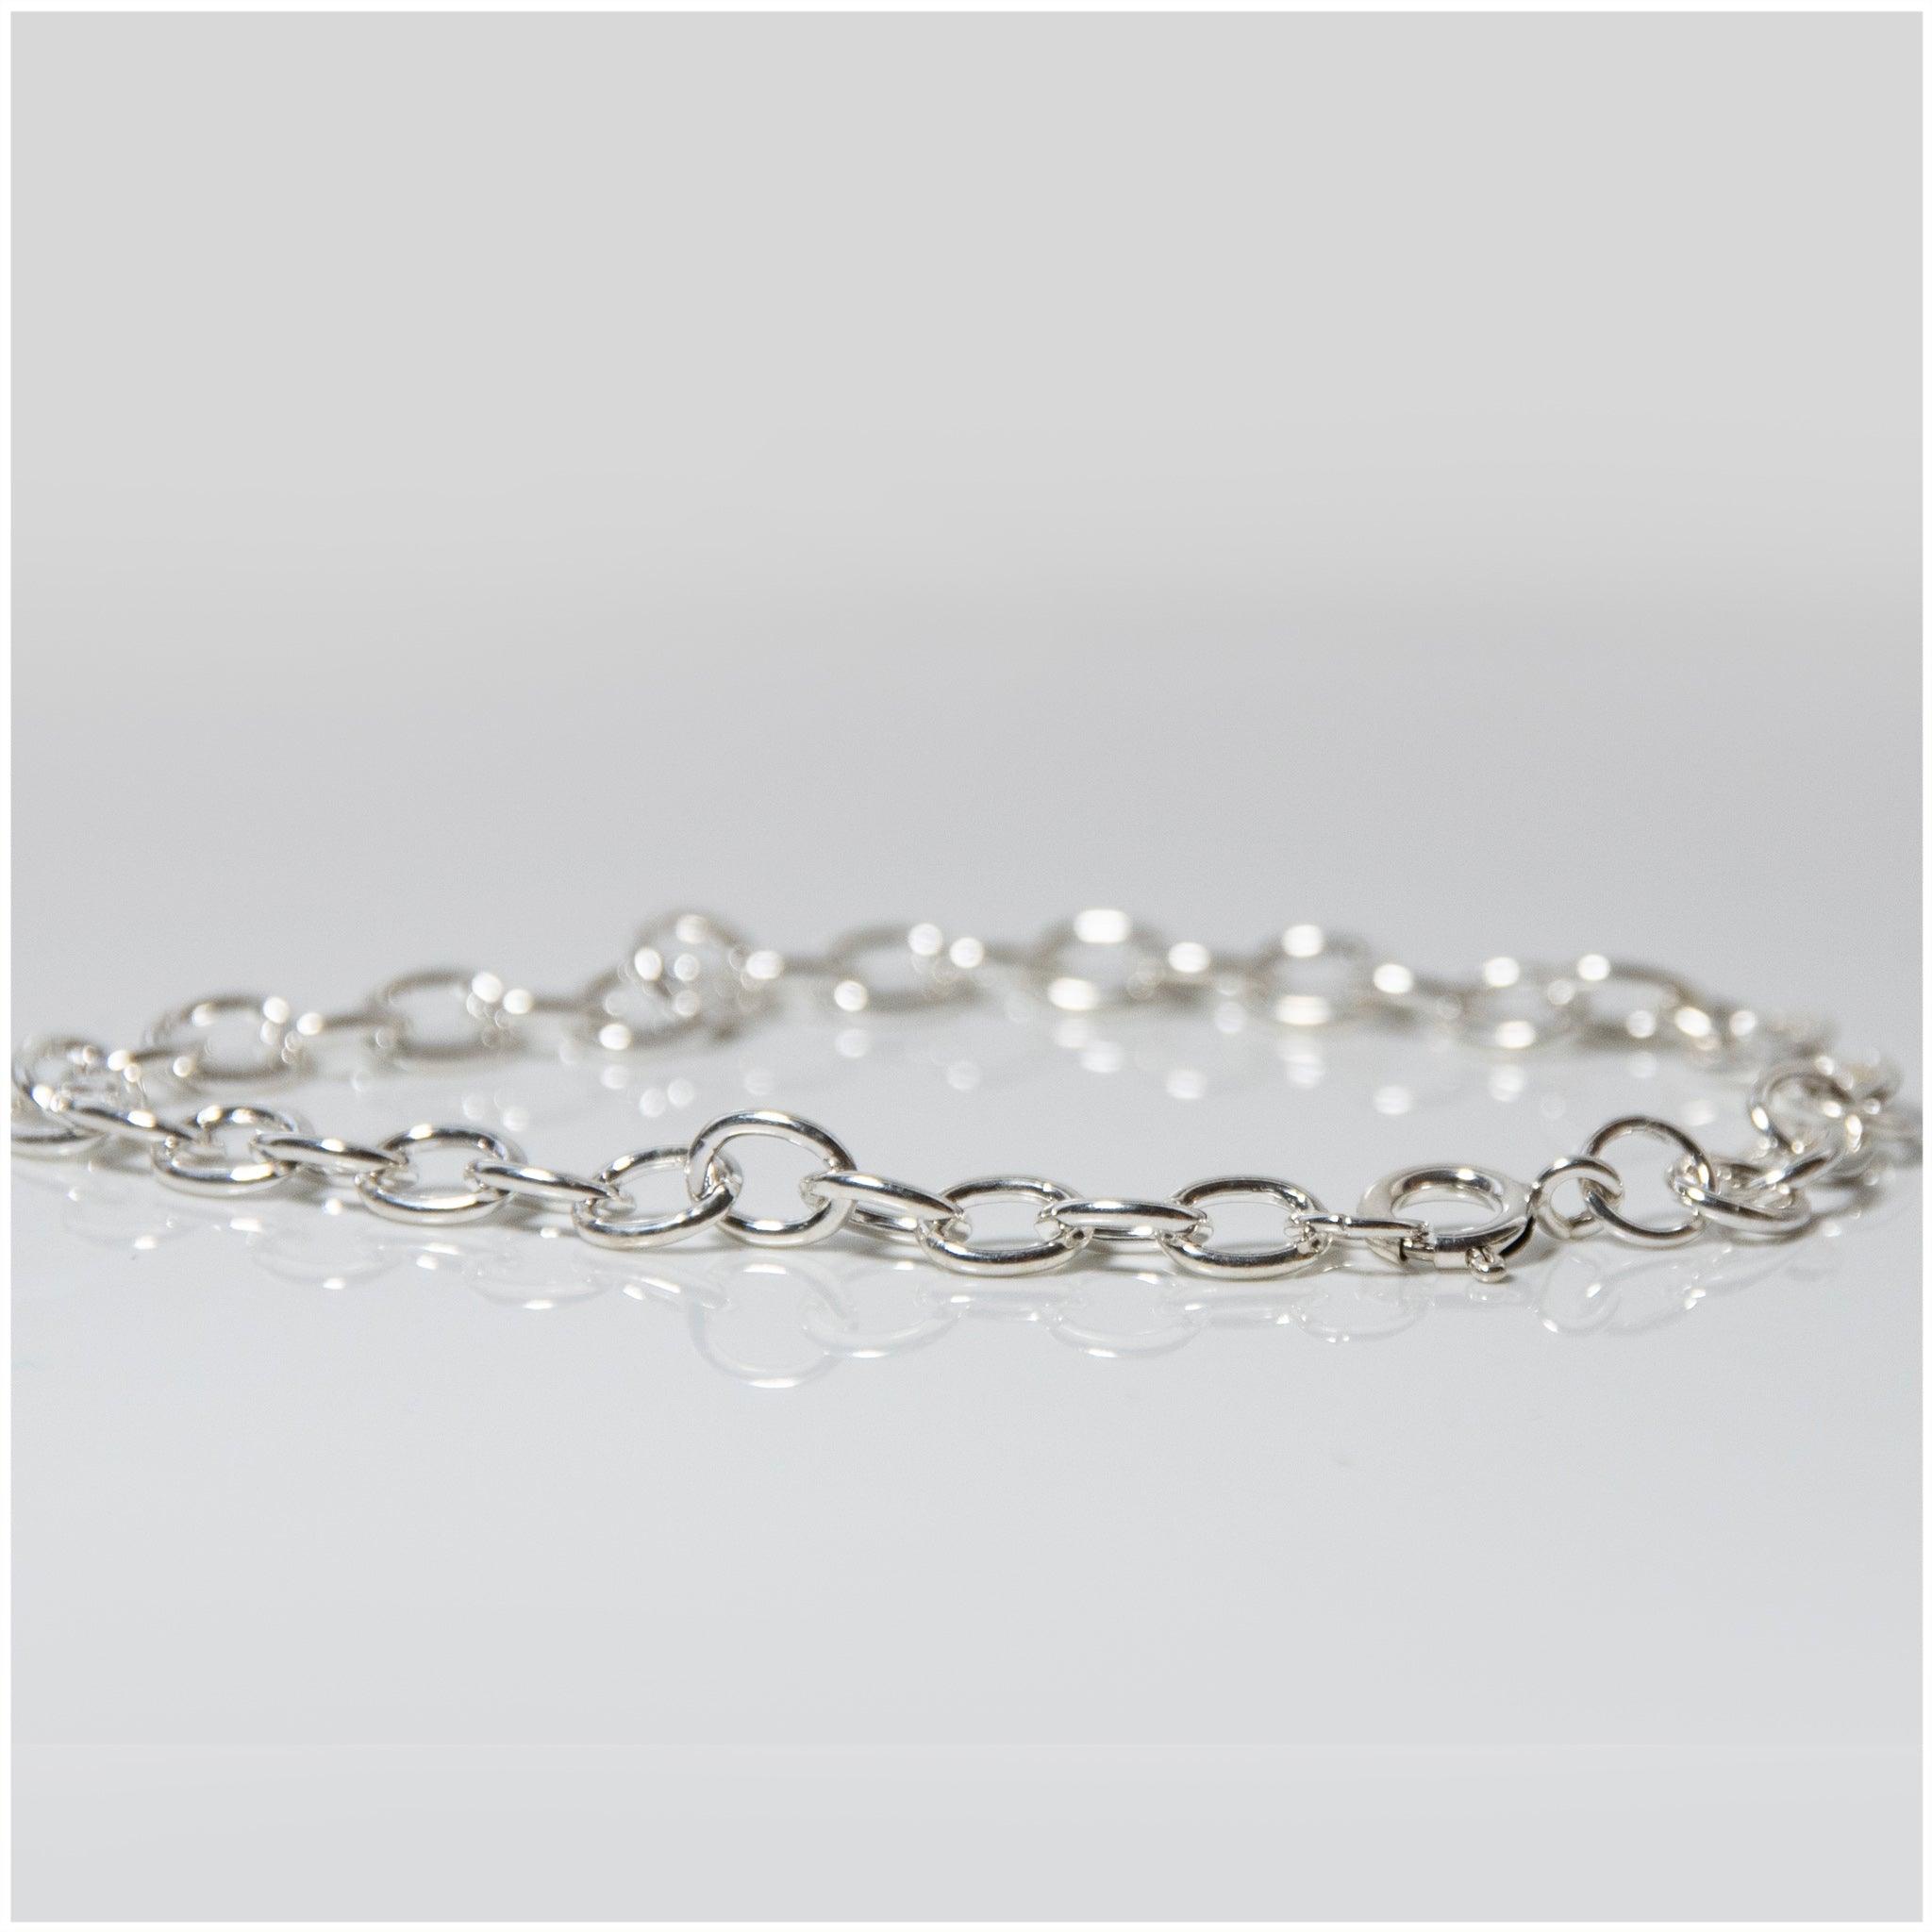 B003 - Sterling Silver Charm Bracelet